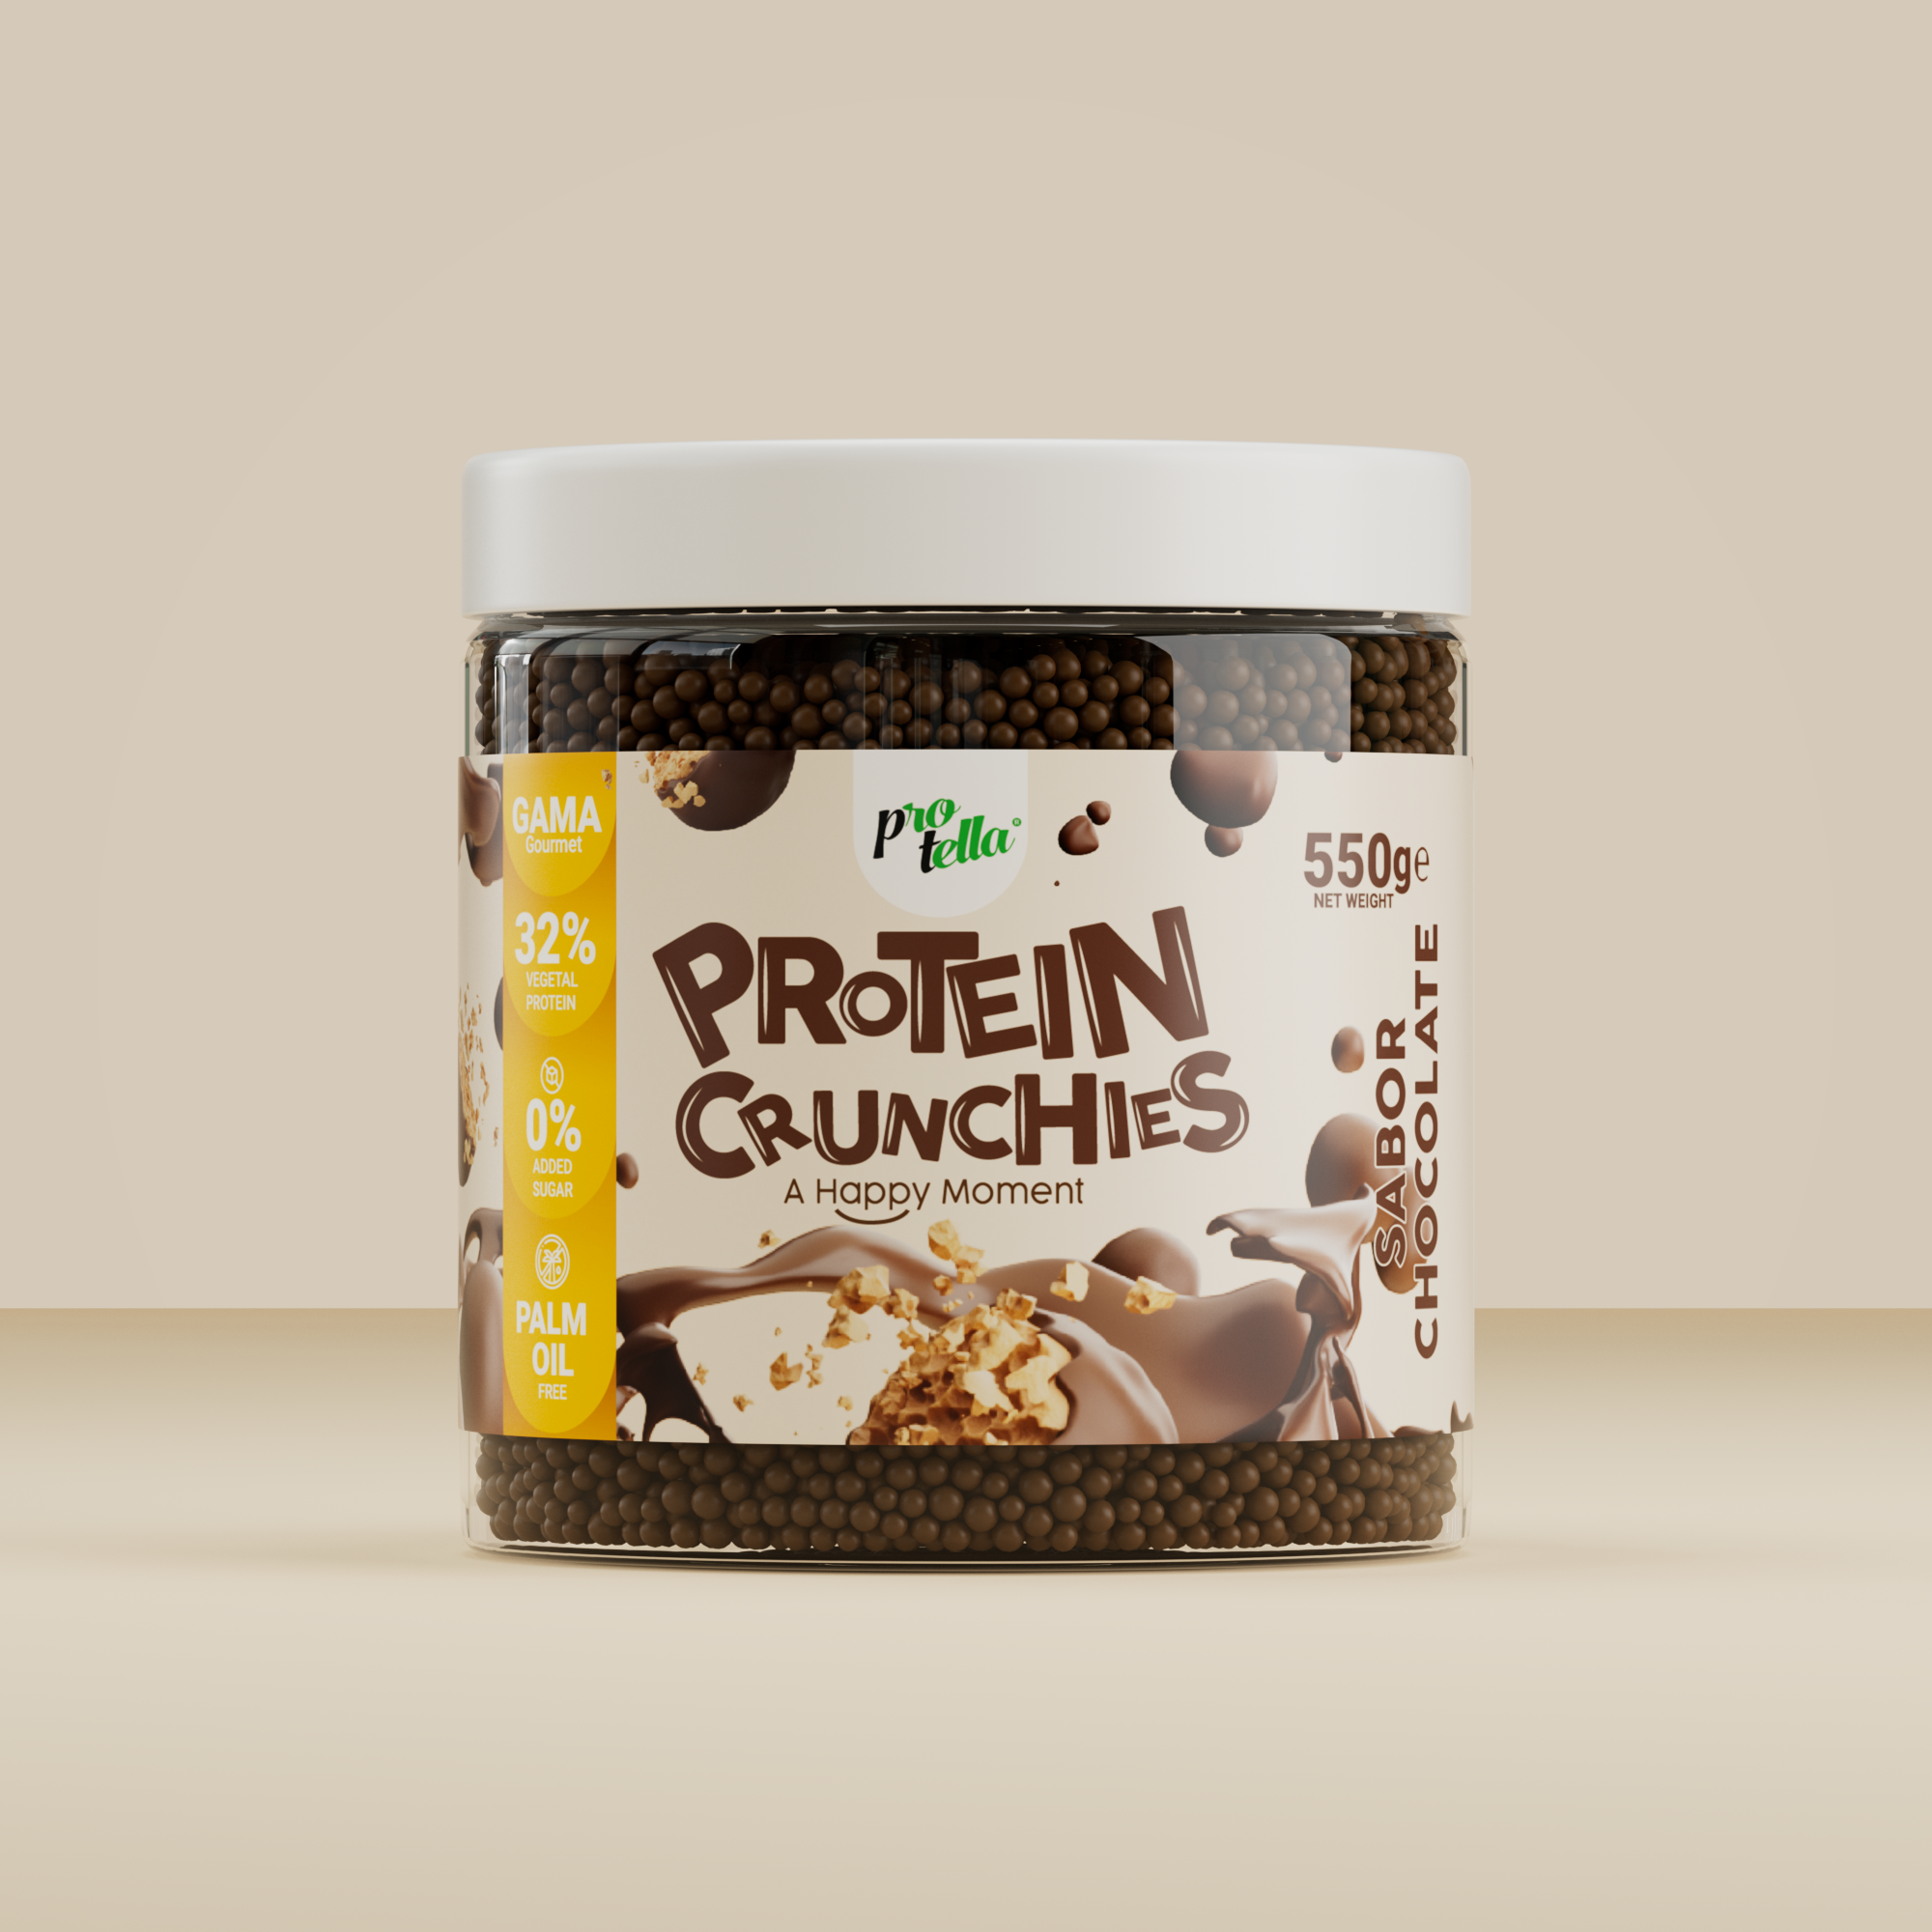 Crunchies De Proteína Chocolate 550gr